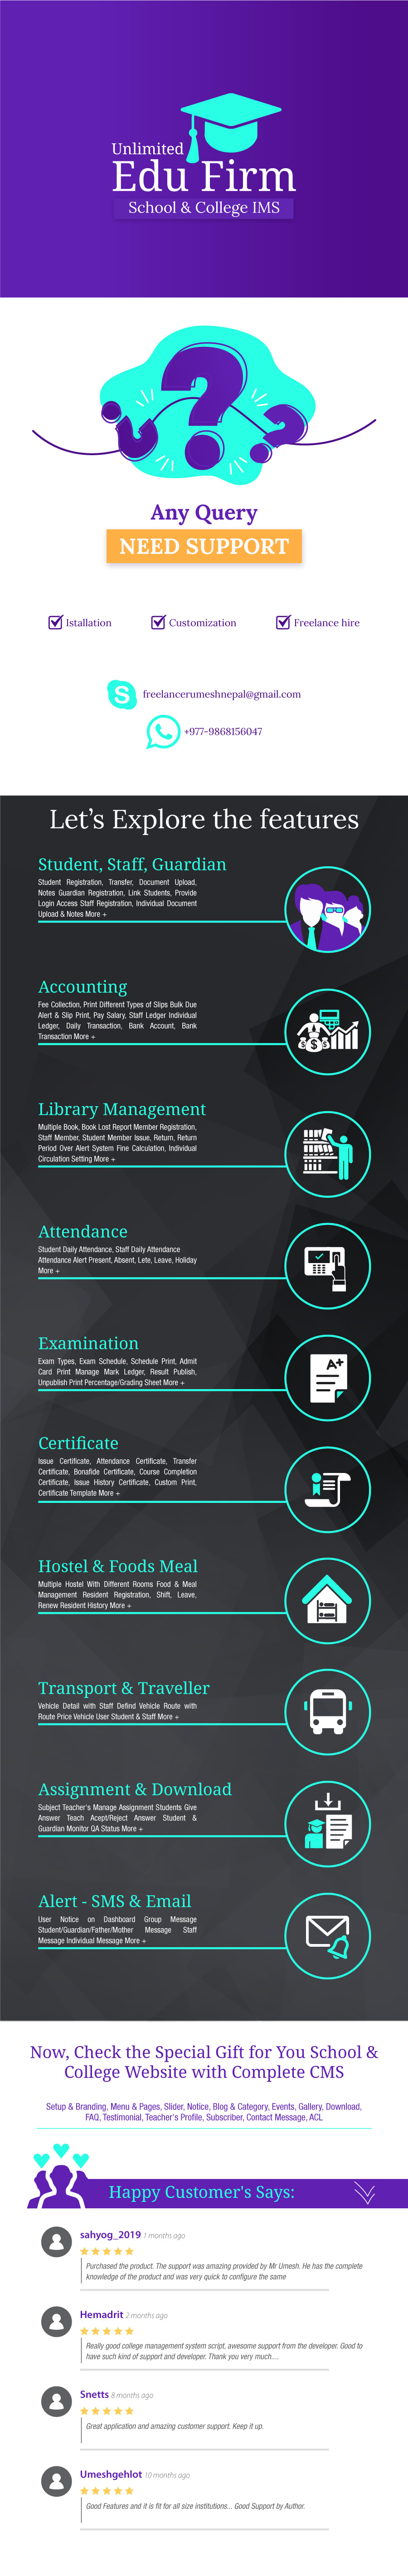 Unlimited Edu Firm School & College Information Management System - 1